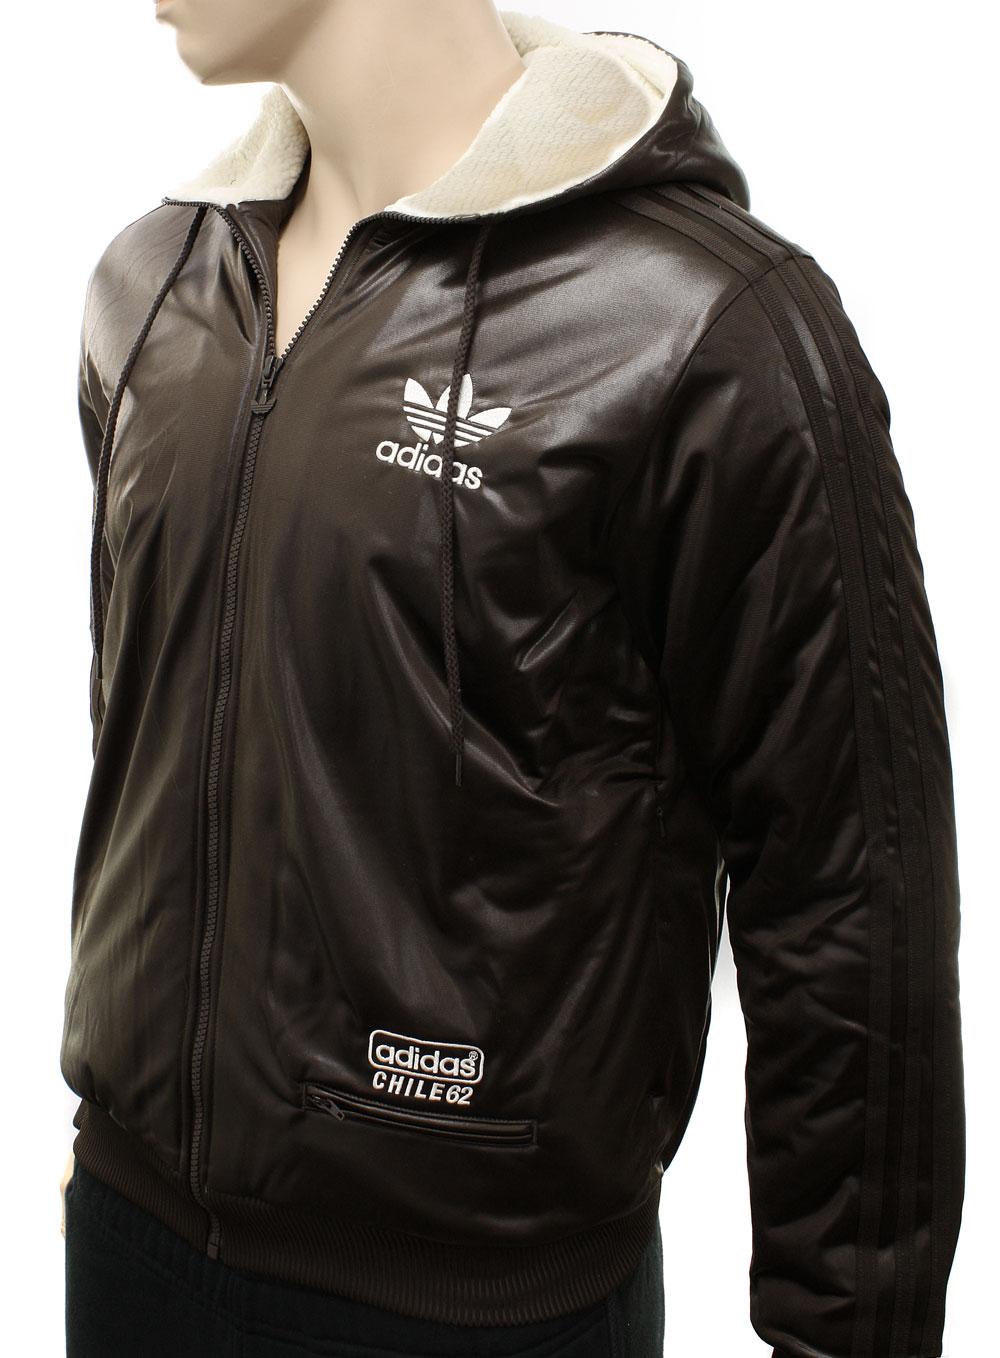 Foto New Adidas Originals Mens M Chile 62 Padded TT Hooded Bomber Jacket